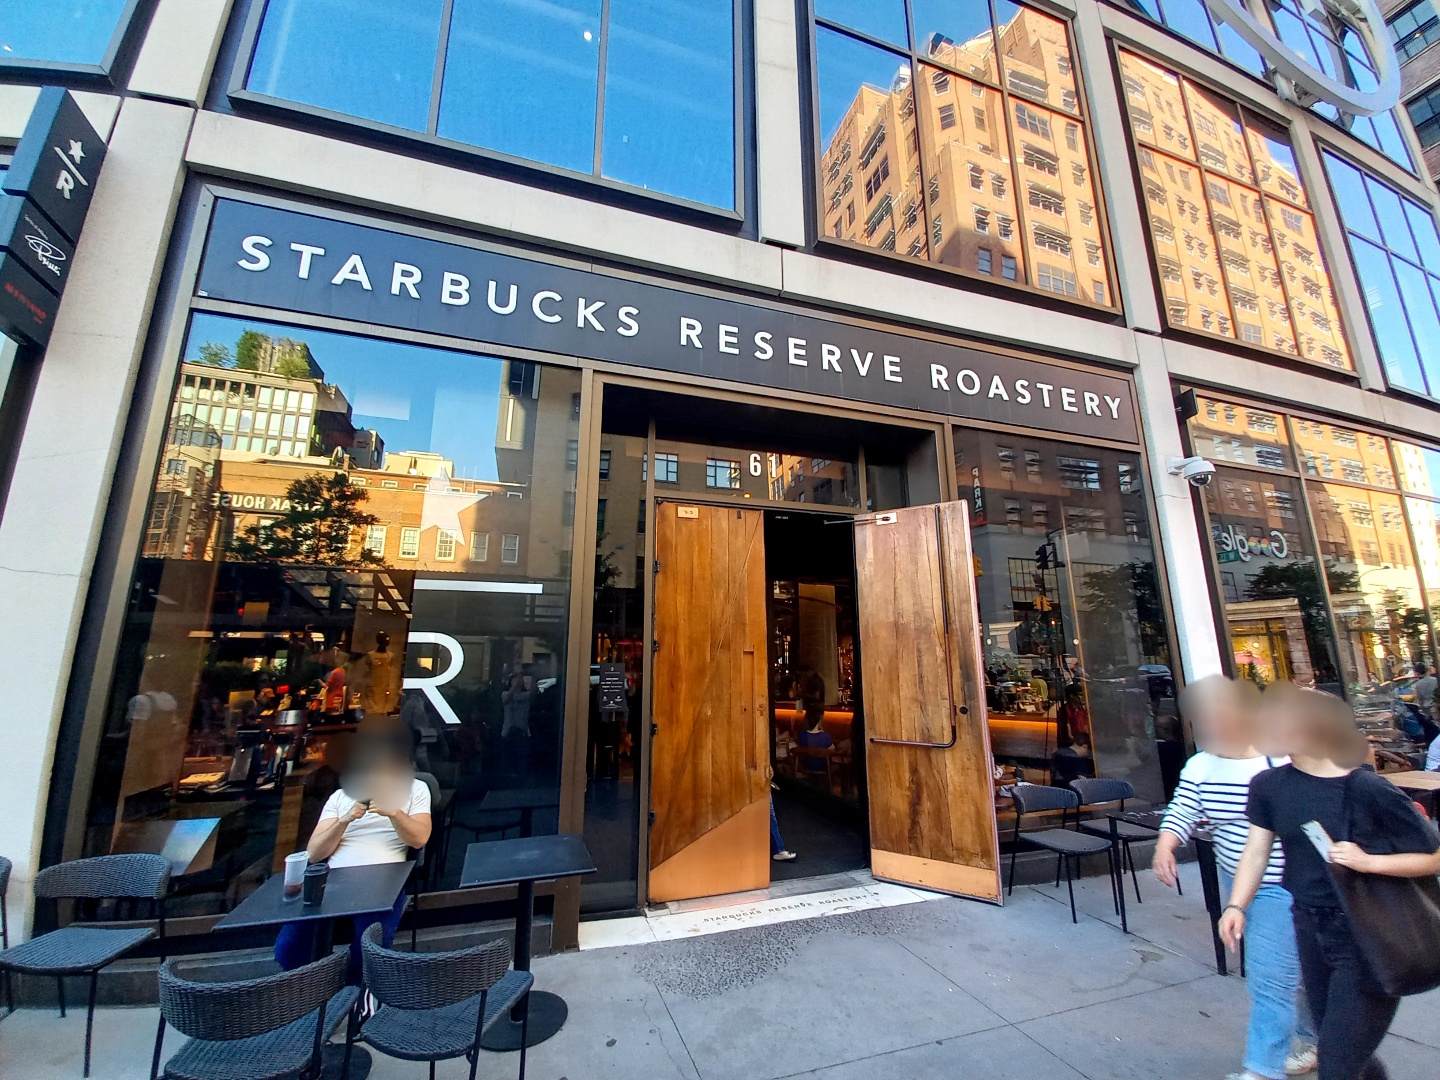 Starbucks Reserve Roastery